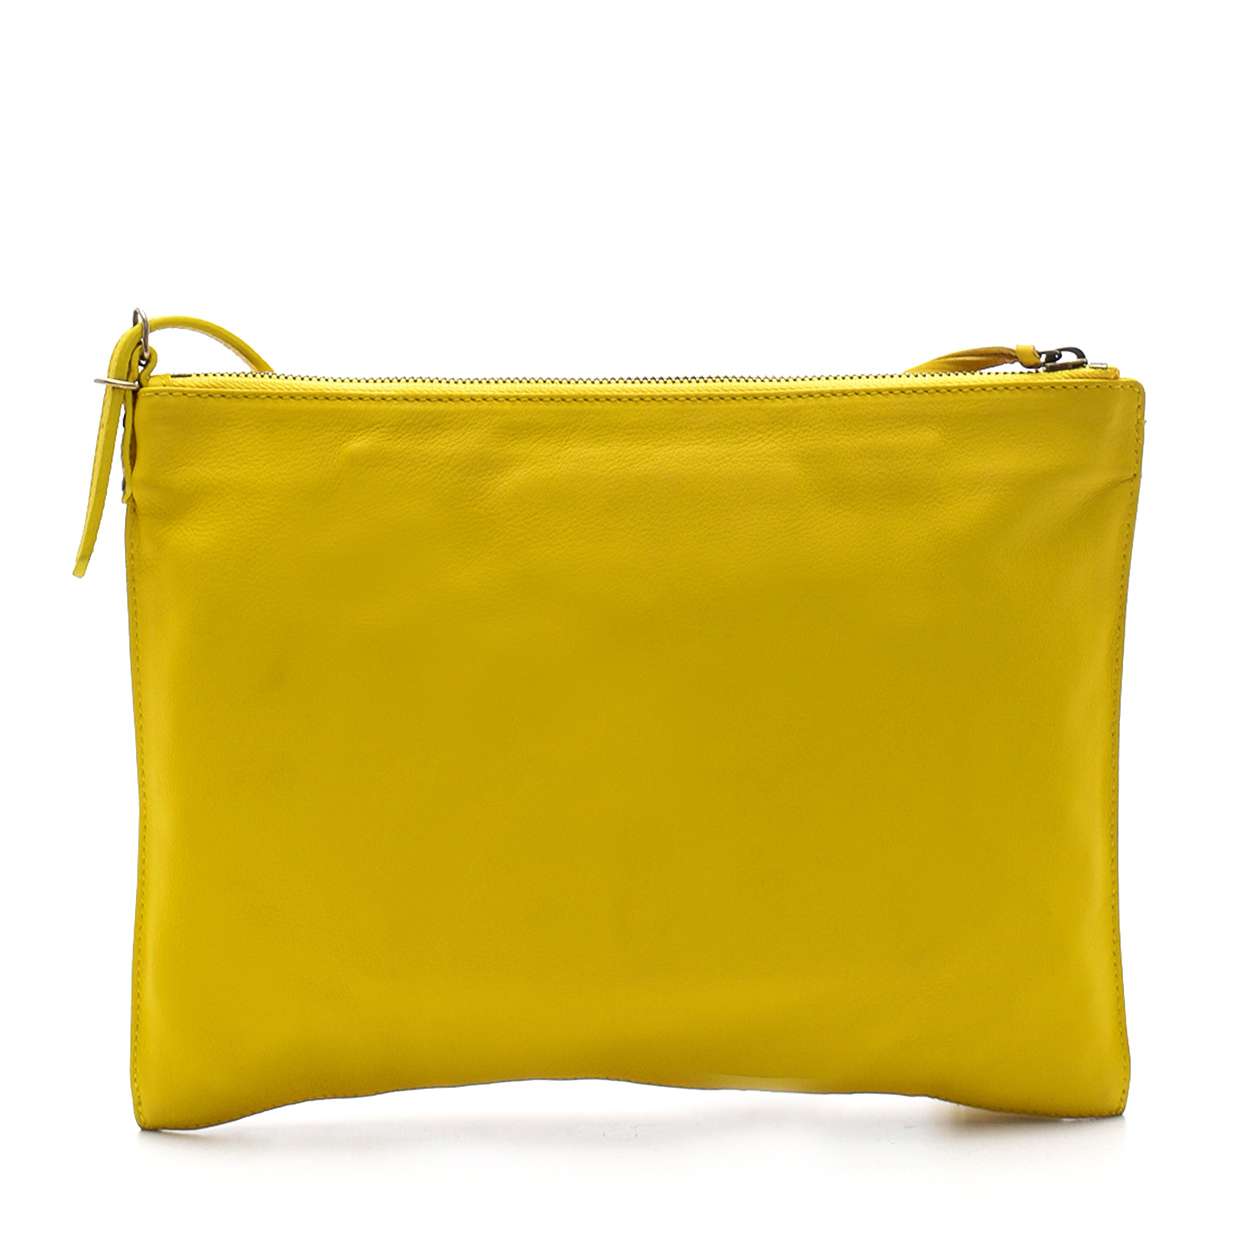 Balenciaga - Yellow Lambskin Leather Papier Clutch